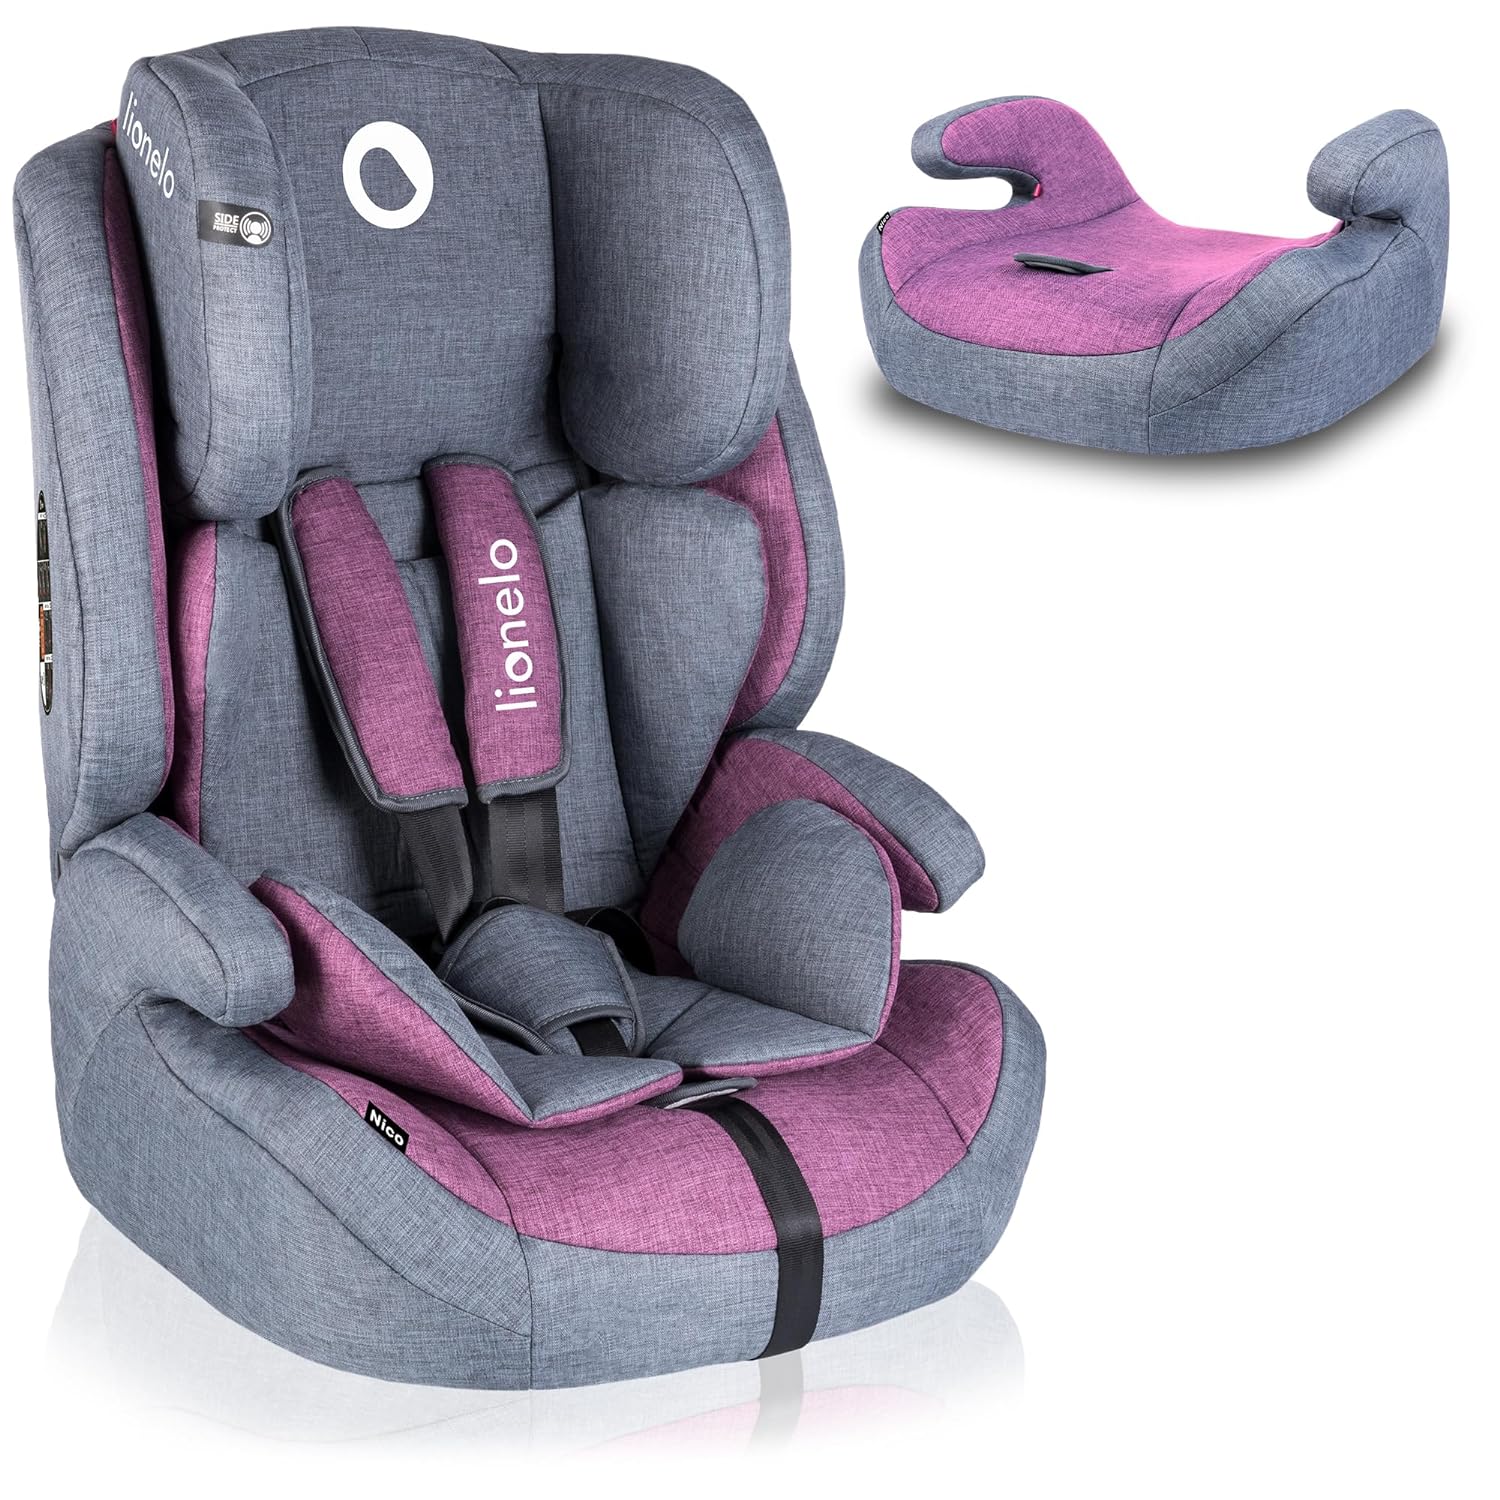 Lionelo Nico Child Car Seat, Group 1, 2, 3, 9-36 kg, Side Protection, 5-Point Seat Belt, Removable Backrest, Adjustable Headrest, ECE R44 04 blue